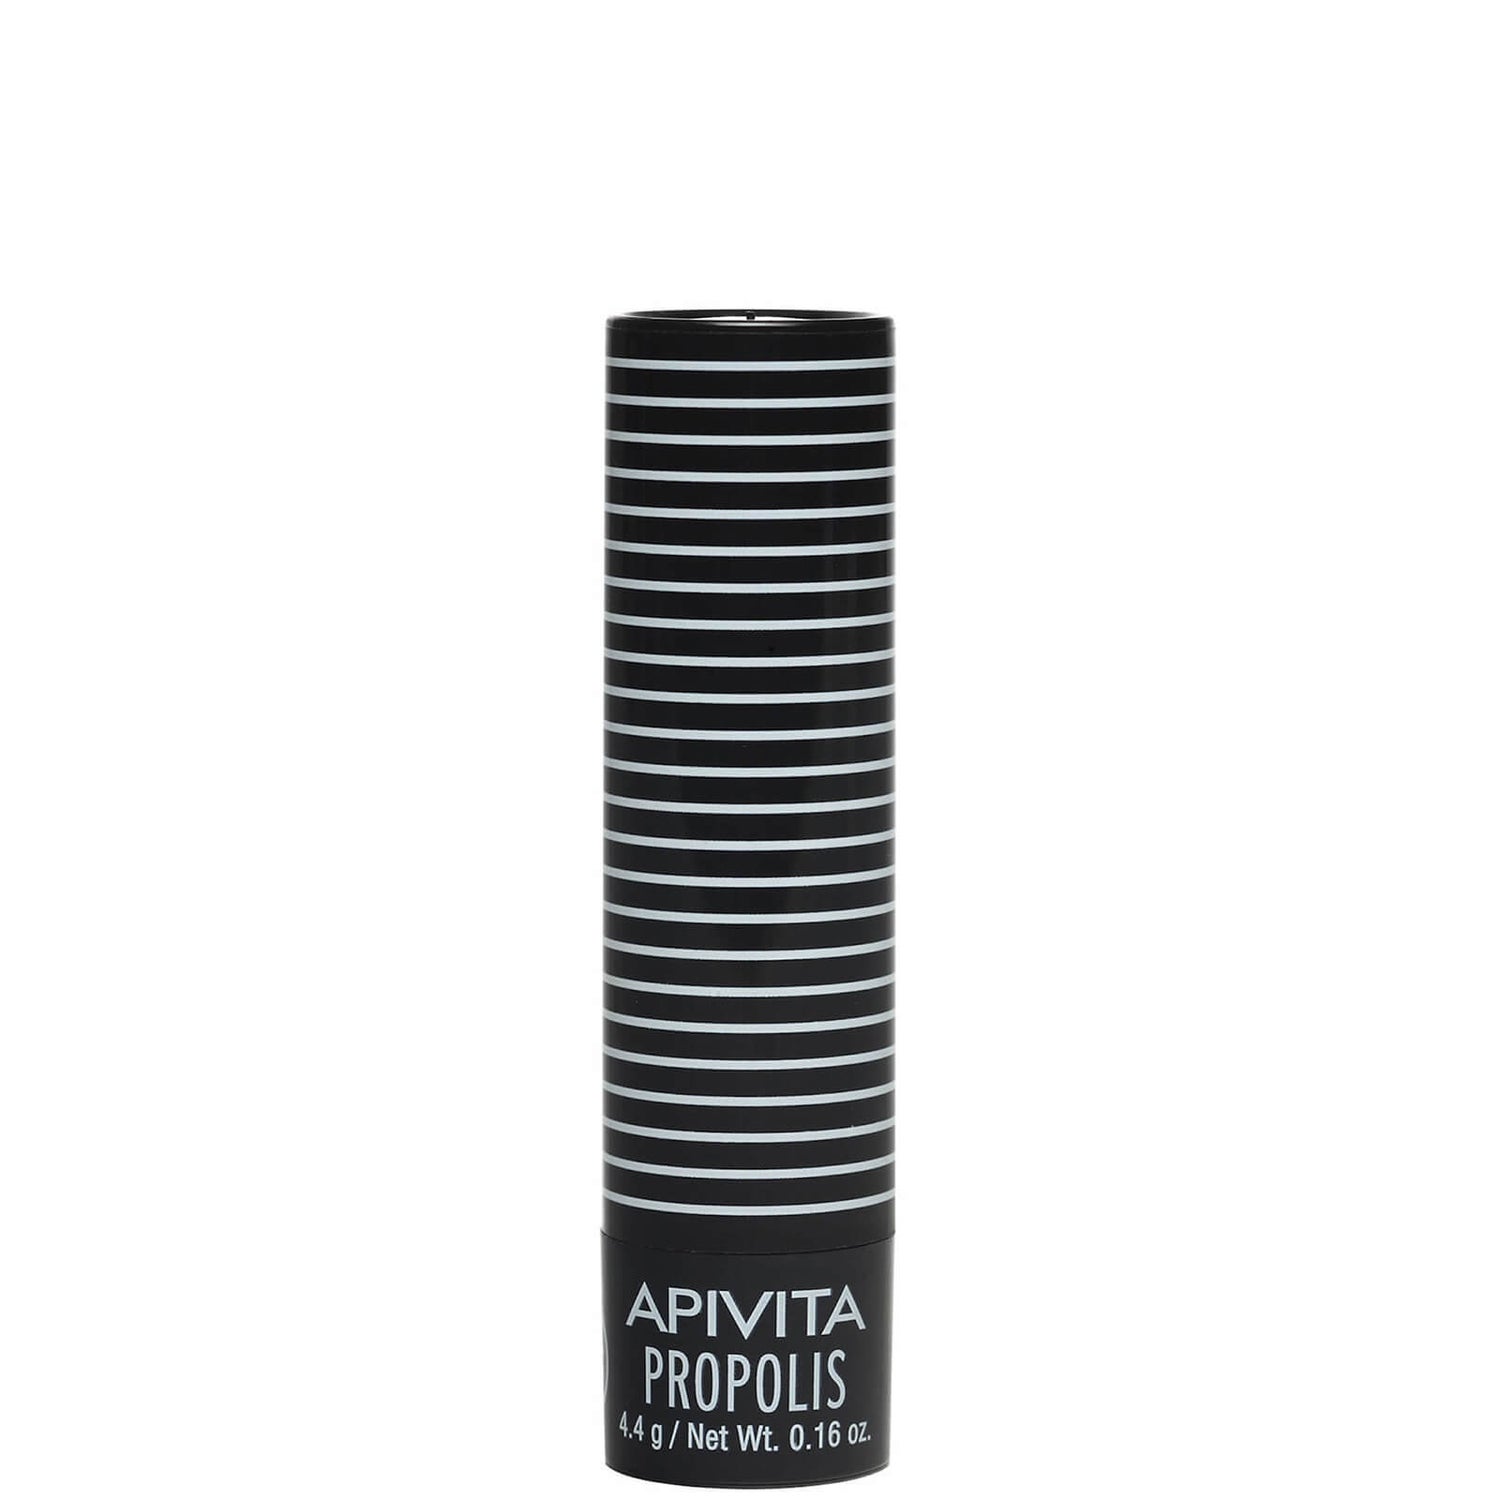 APIVITA Propolis Lipcare 0.16 oz